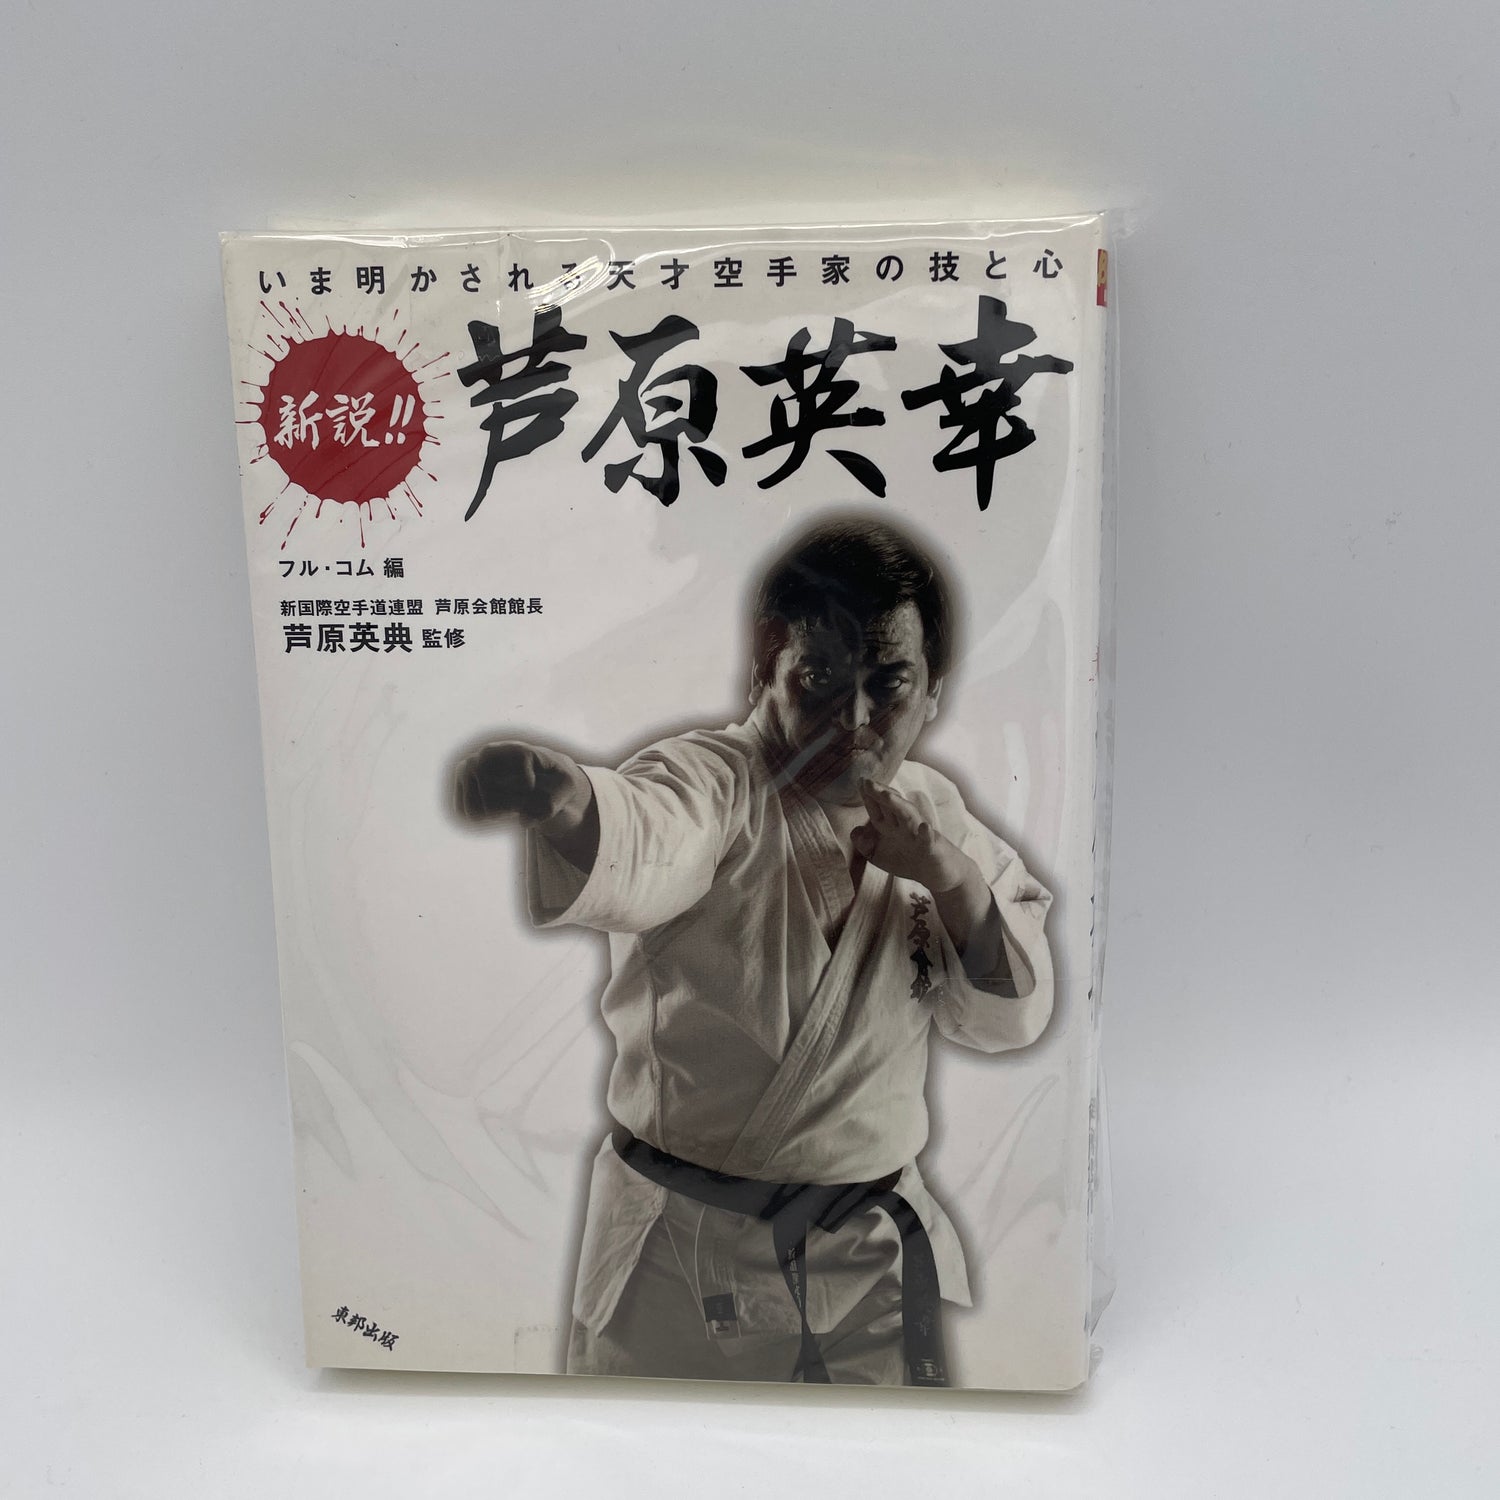 Skill & Heart of Genius Karateka Libro y DVD de Hidenori Ashihara (usado) 